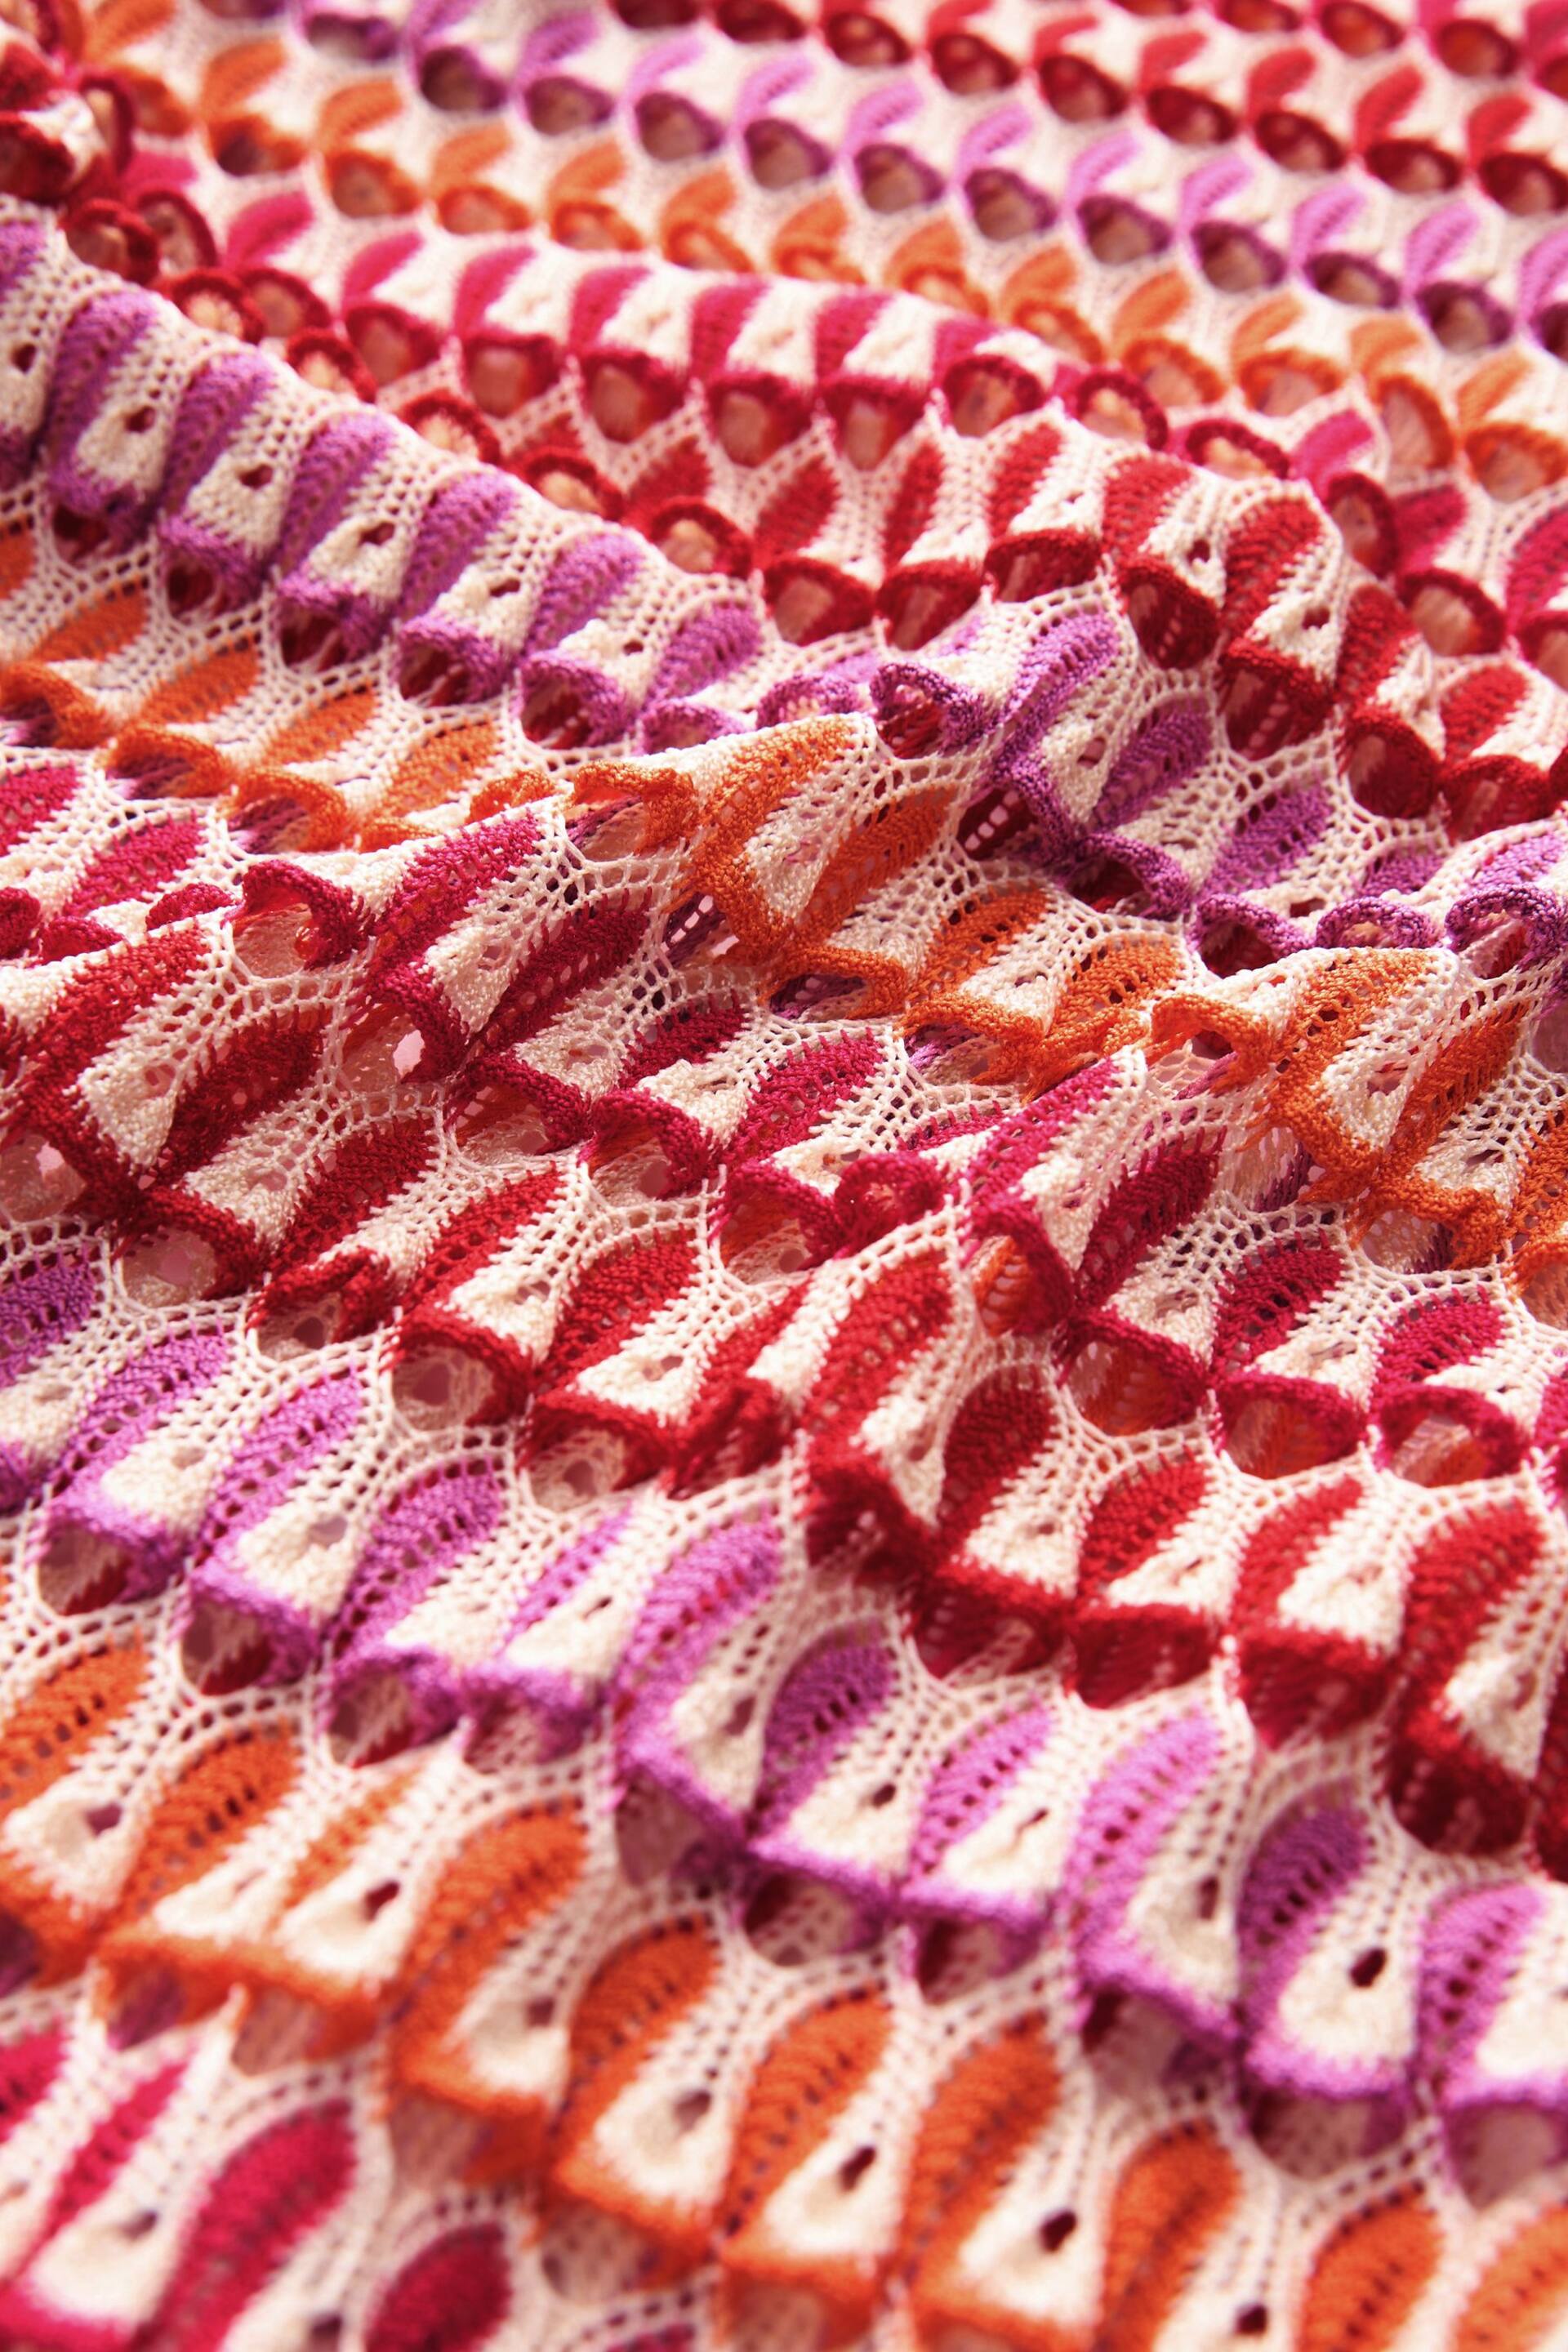 Pink/Orange Long Sleeve Crochet Top - Image 6 of 6